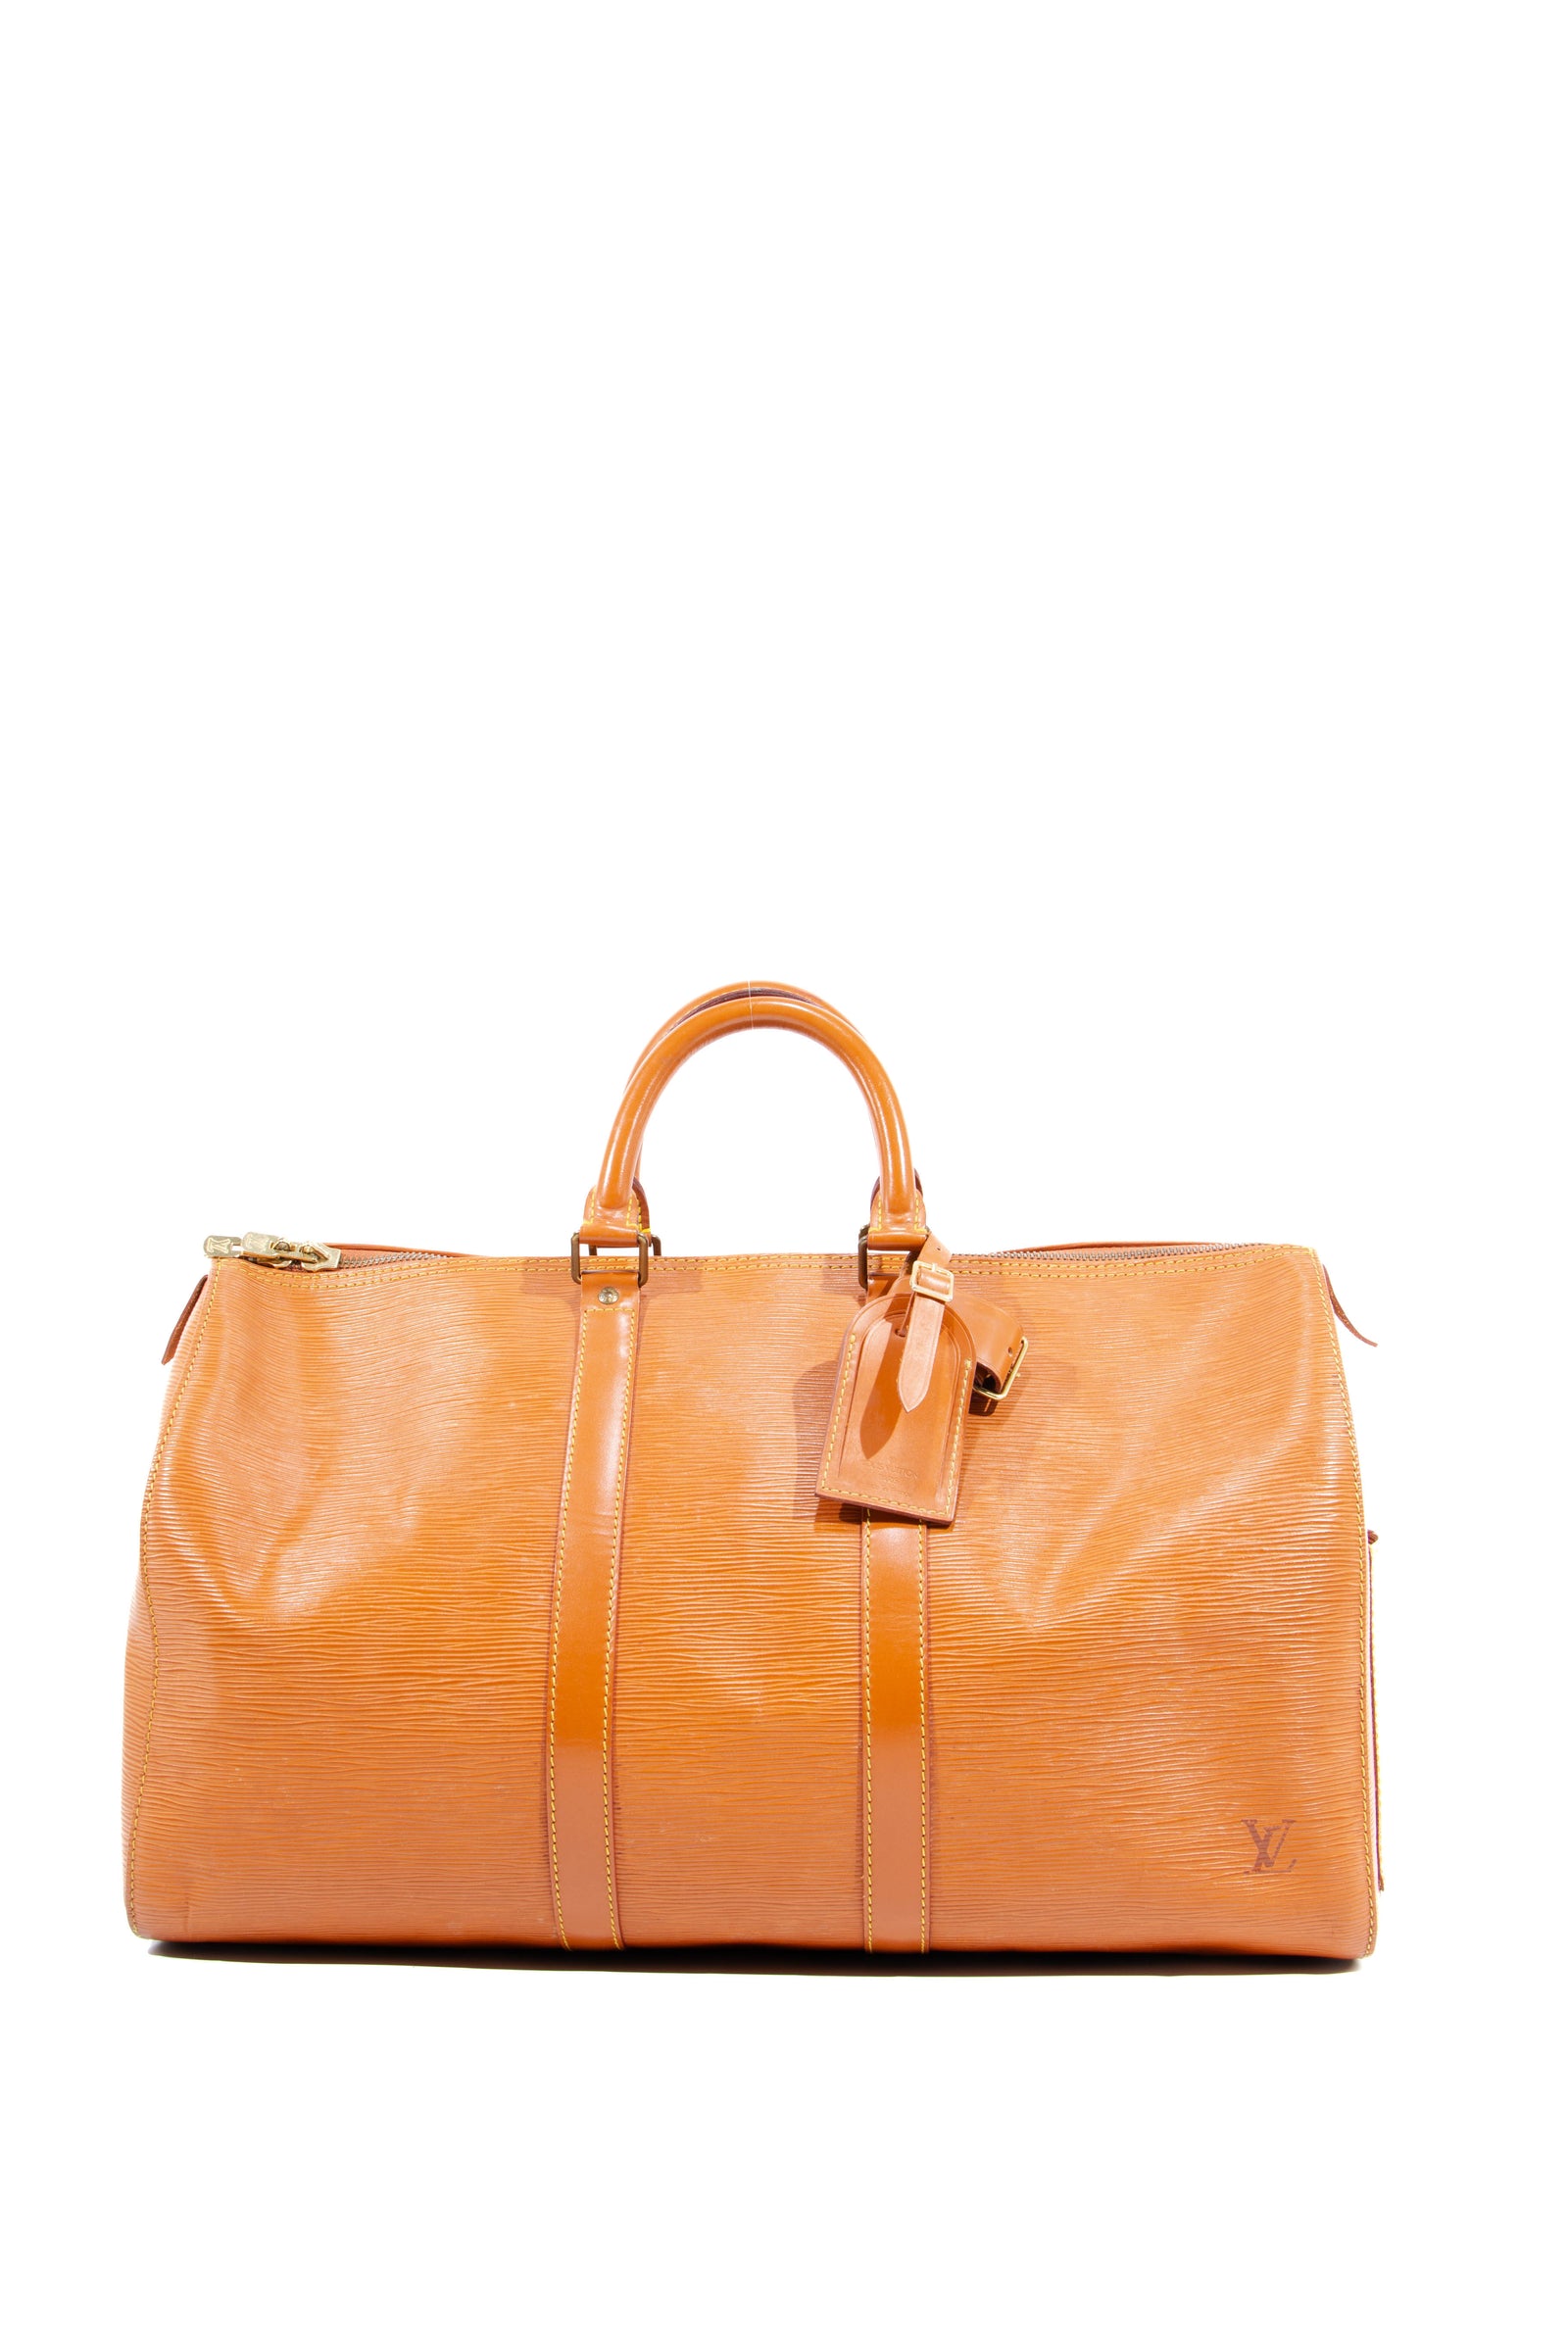 Louis Vuitton Keepall limited edition travel bag 50 epi beach